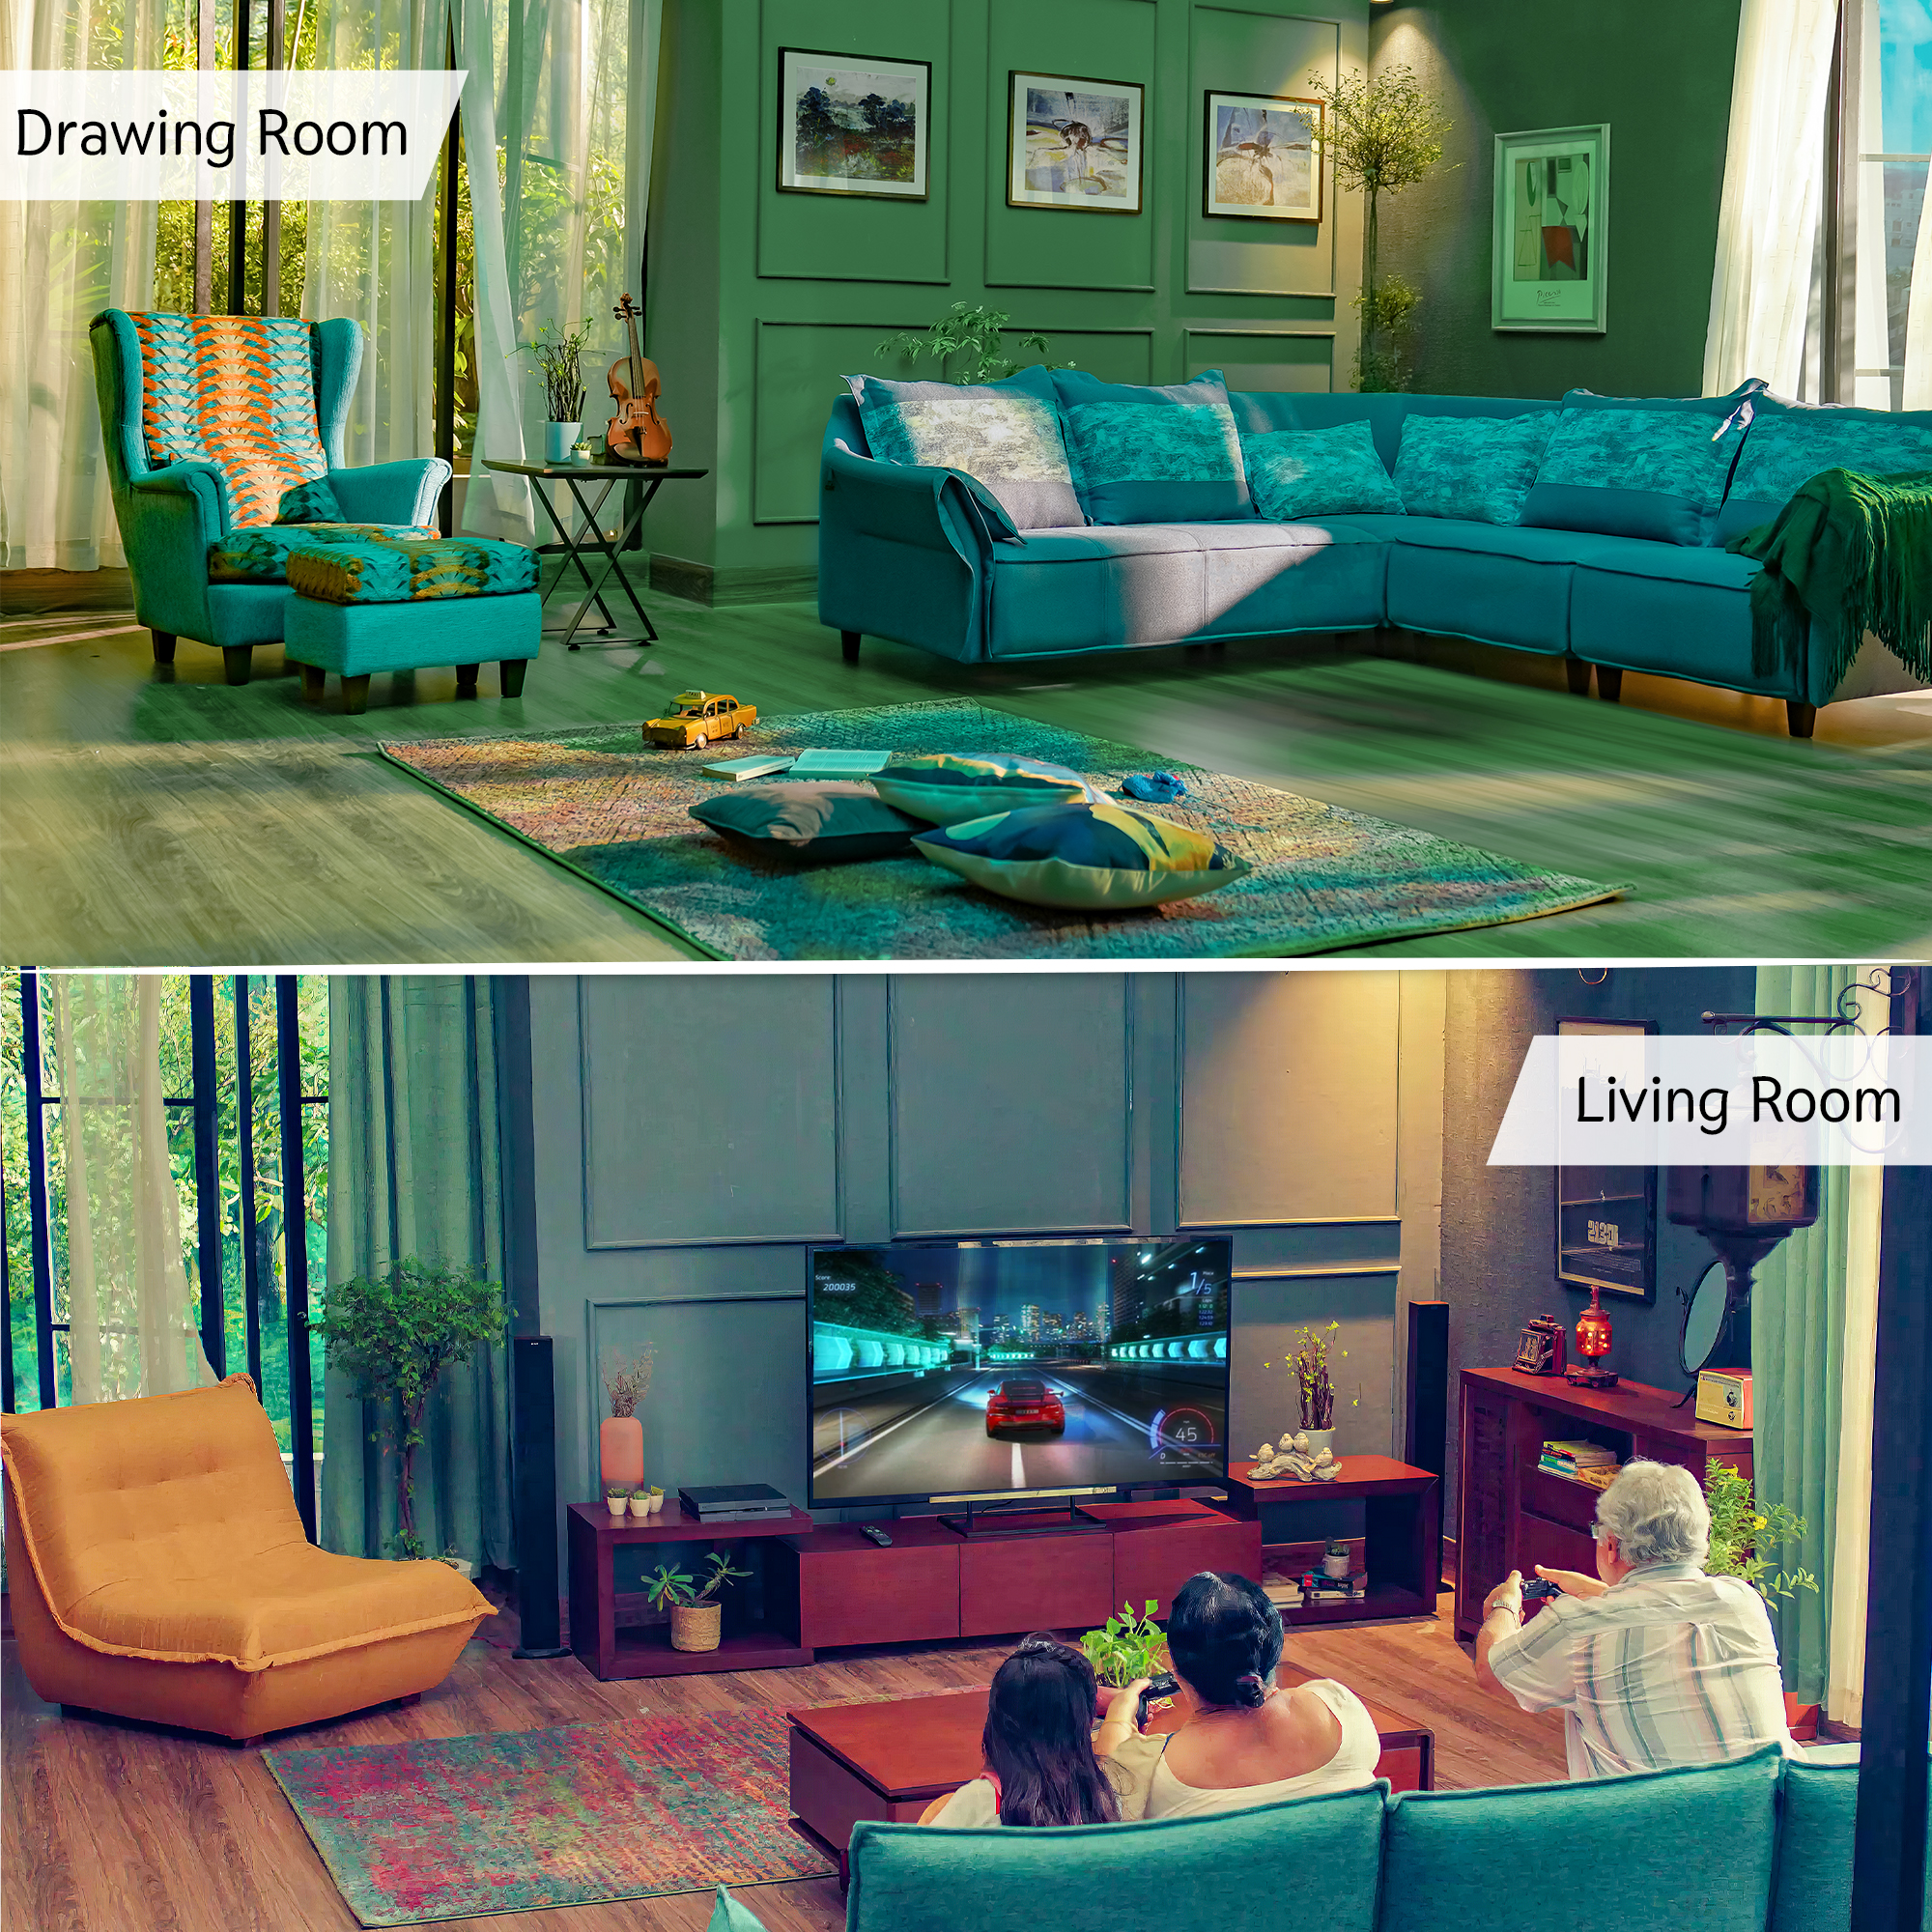 Living room Furniture vs Drawing room Furniture